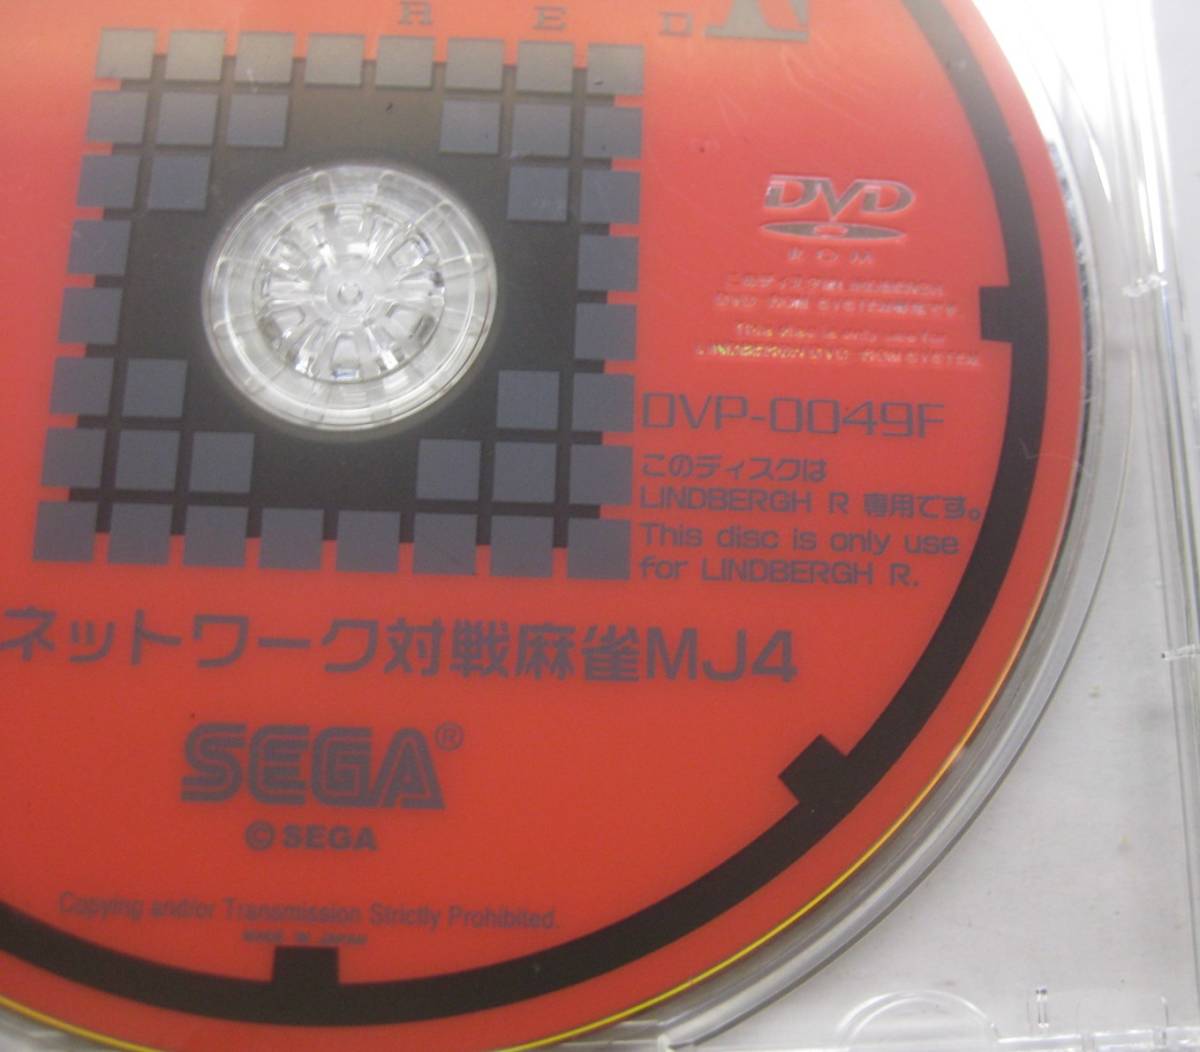 SEGA Sega LINDBERGH RED Sega network against war mah-jong MJ4 DVD-ROM disk DVP-0049F